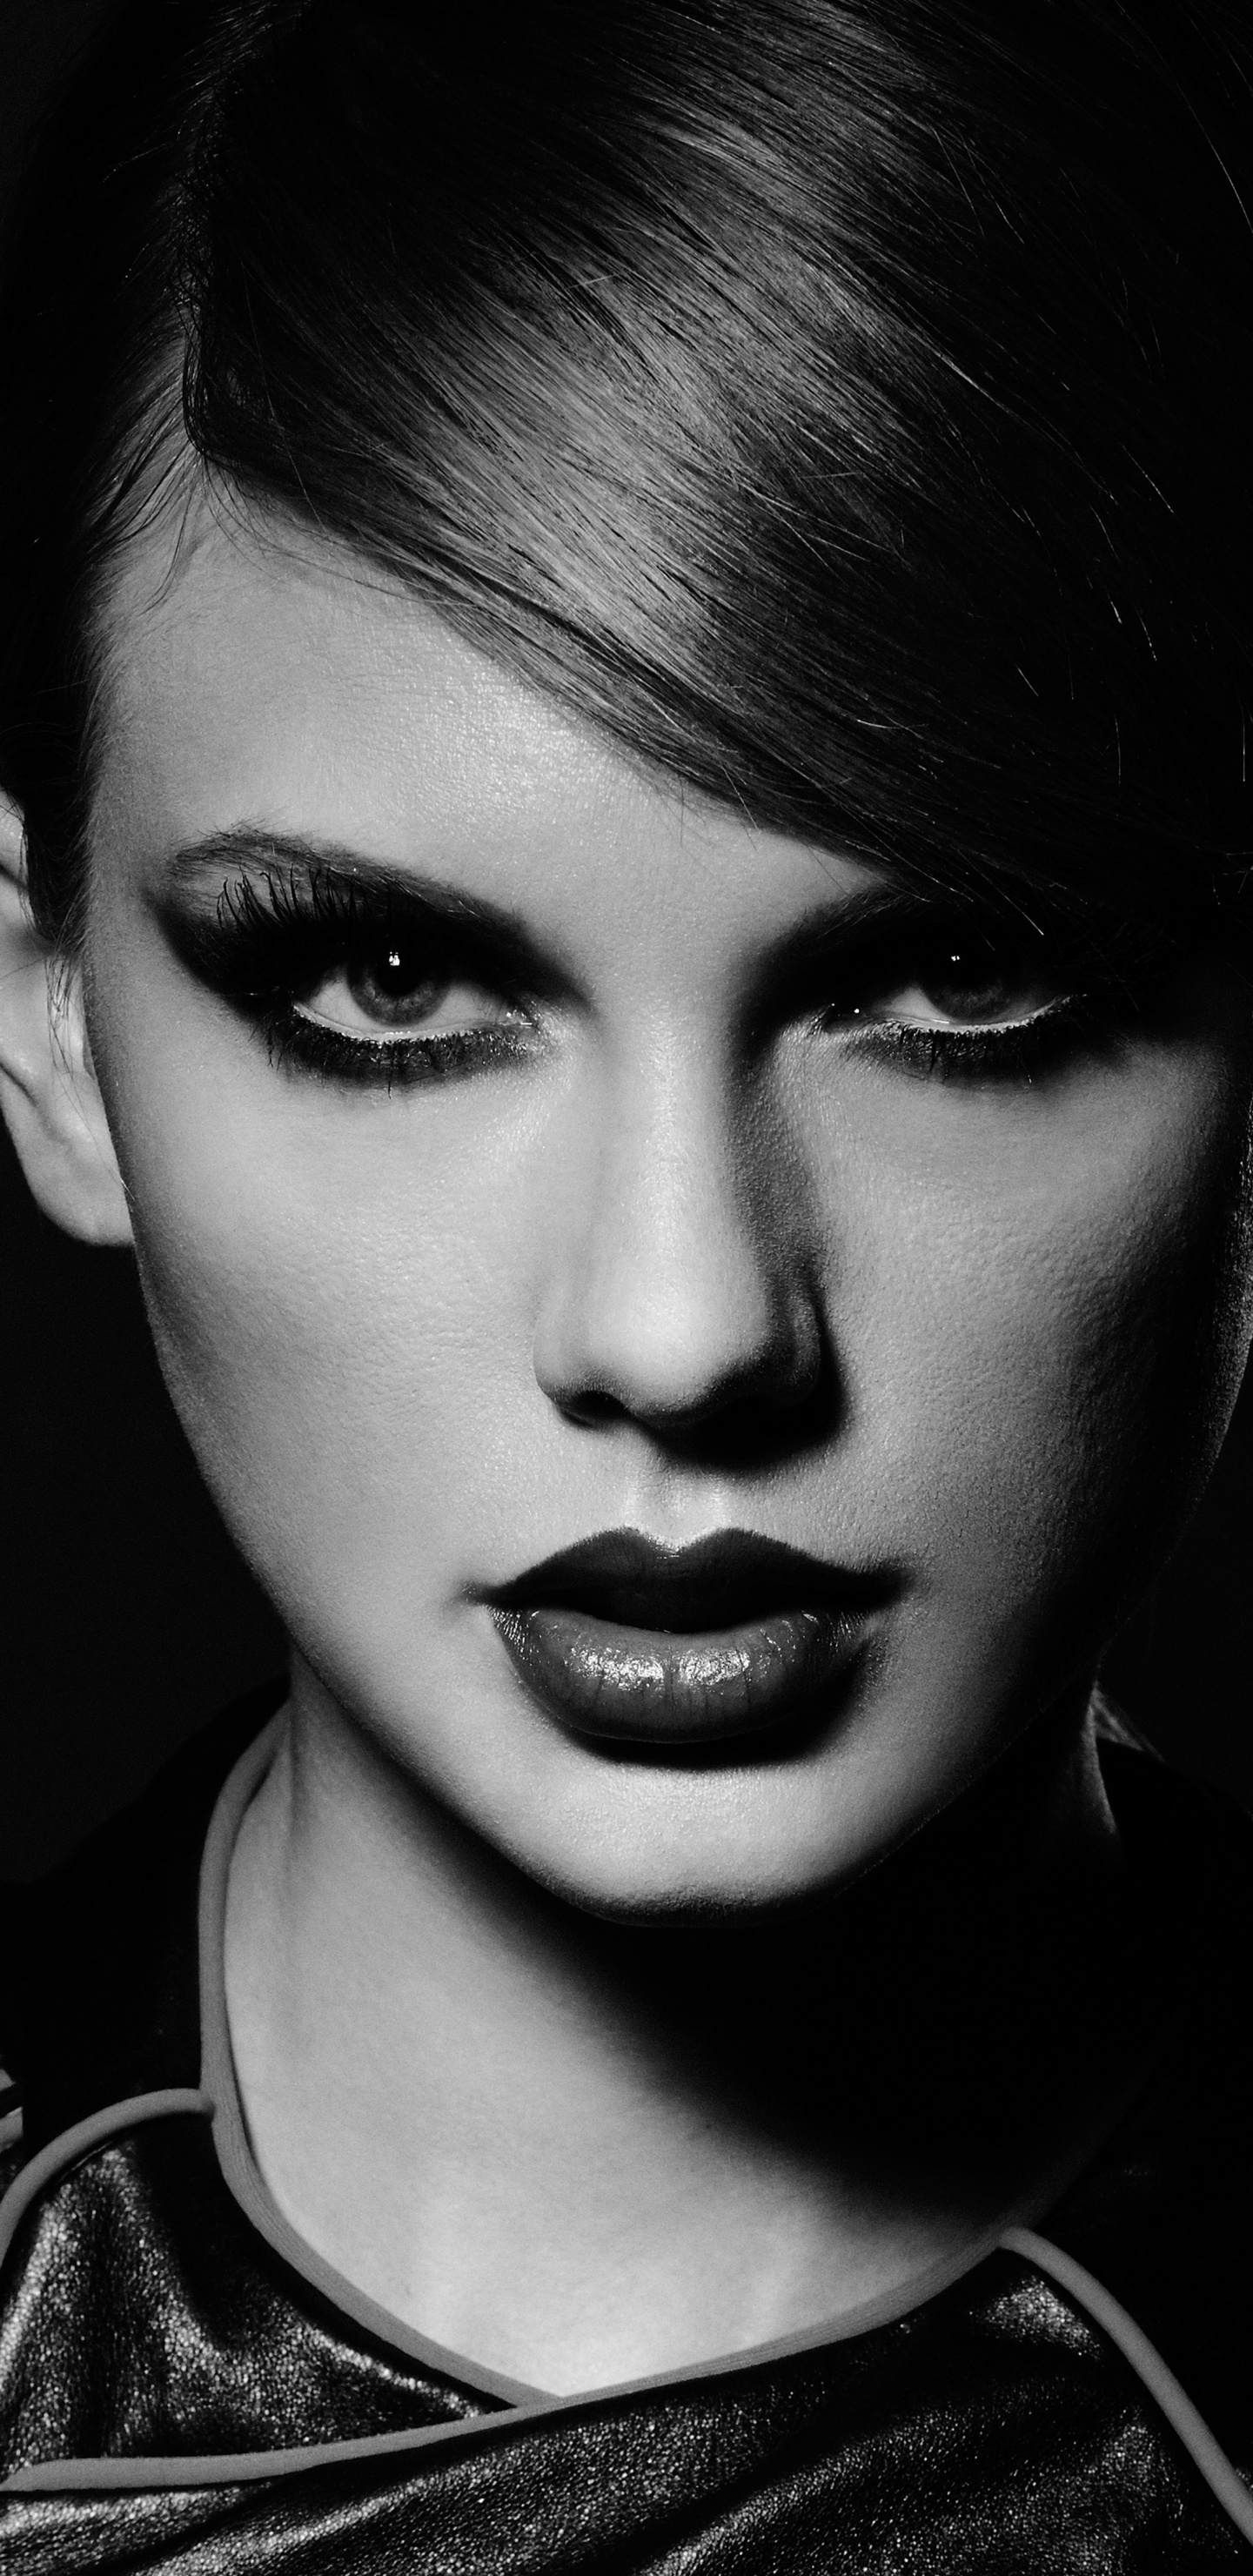 Download Taylor Swift, famous singer, monochrome wallpaper